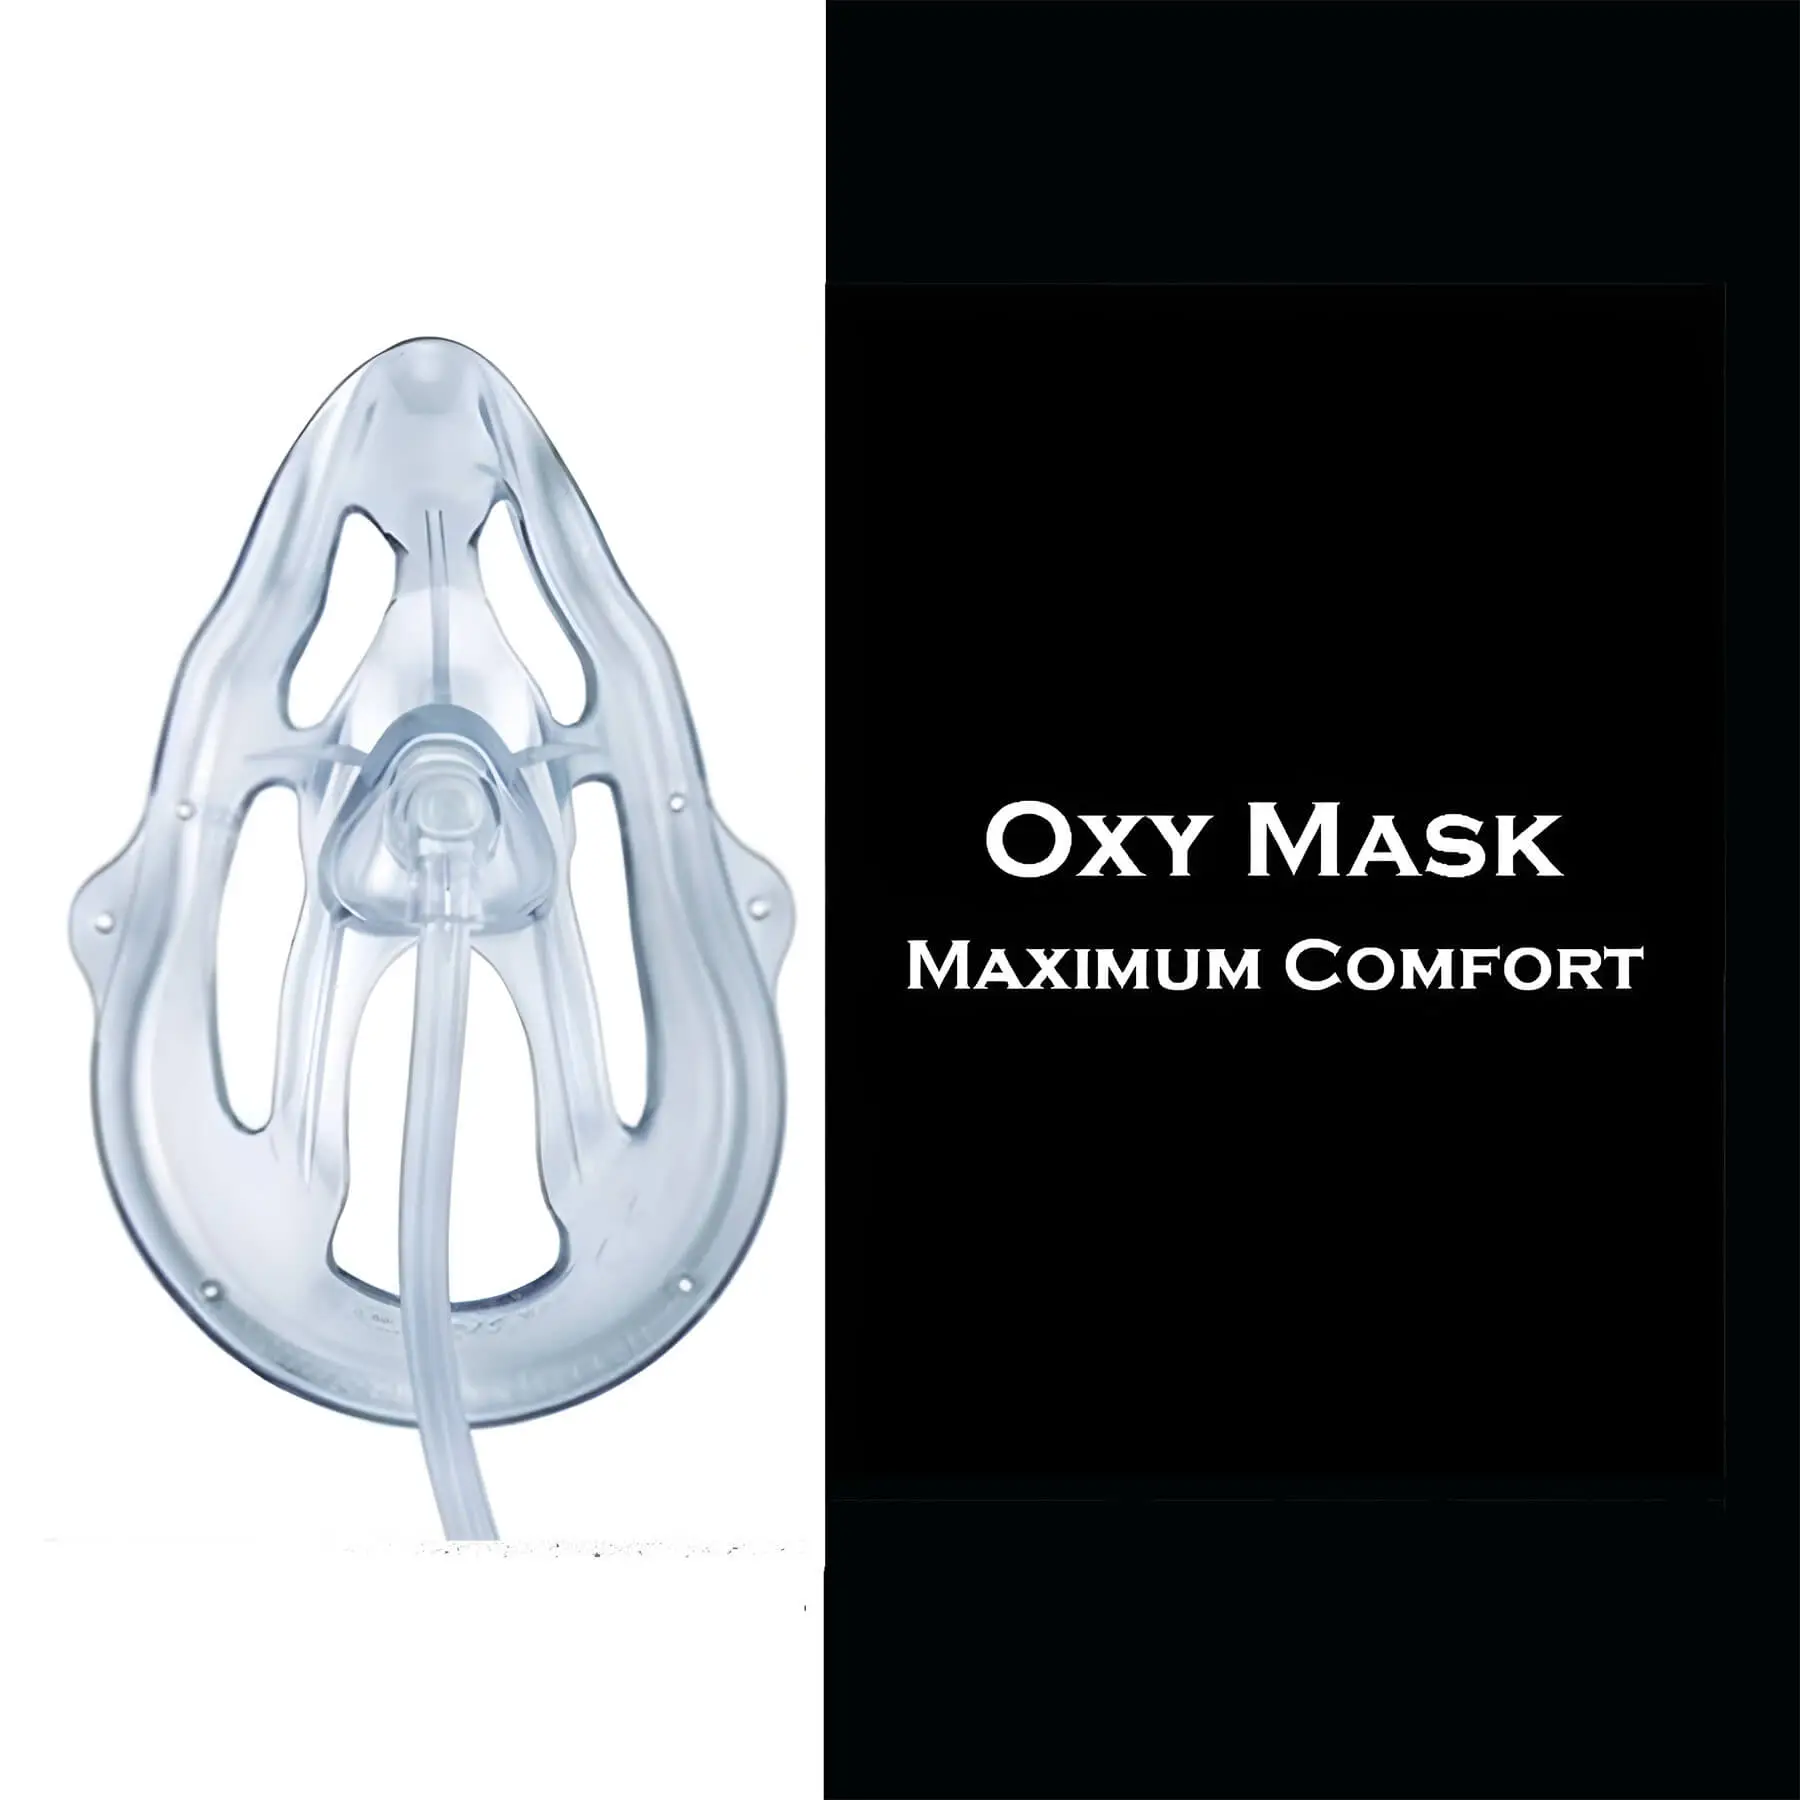 OxyMask – Maximum Comfort